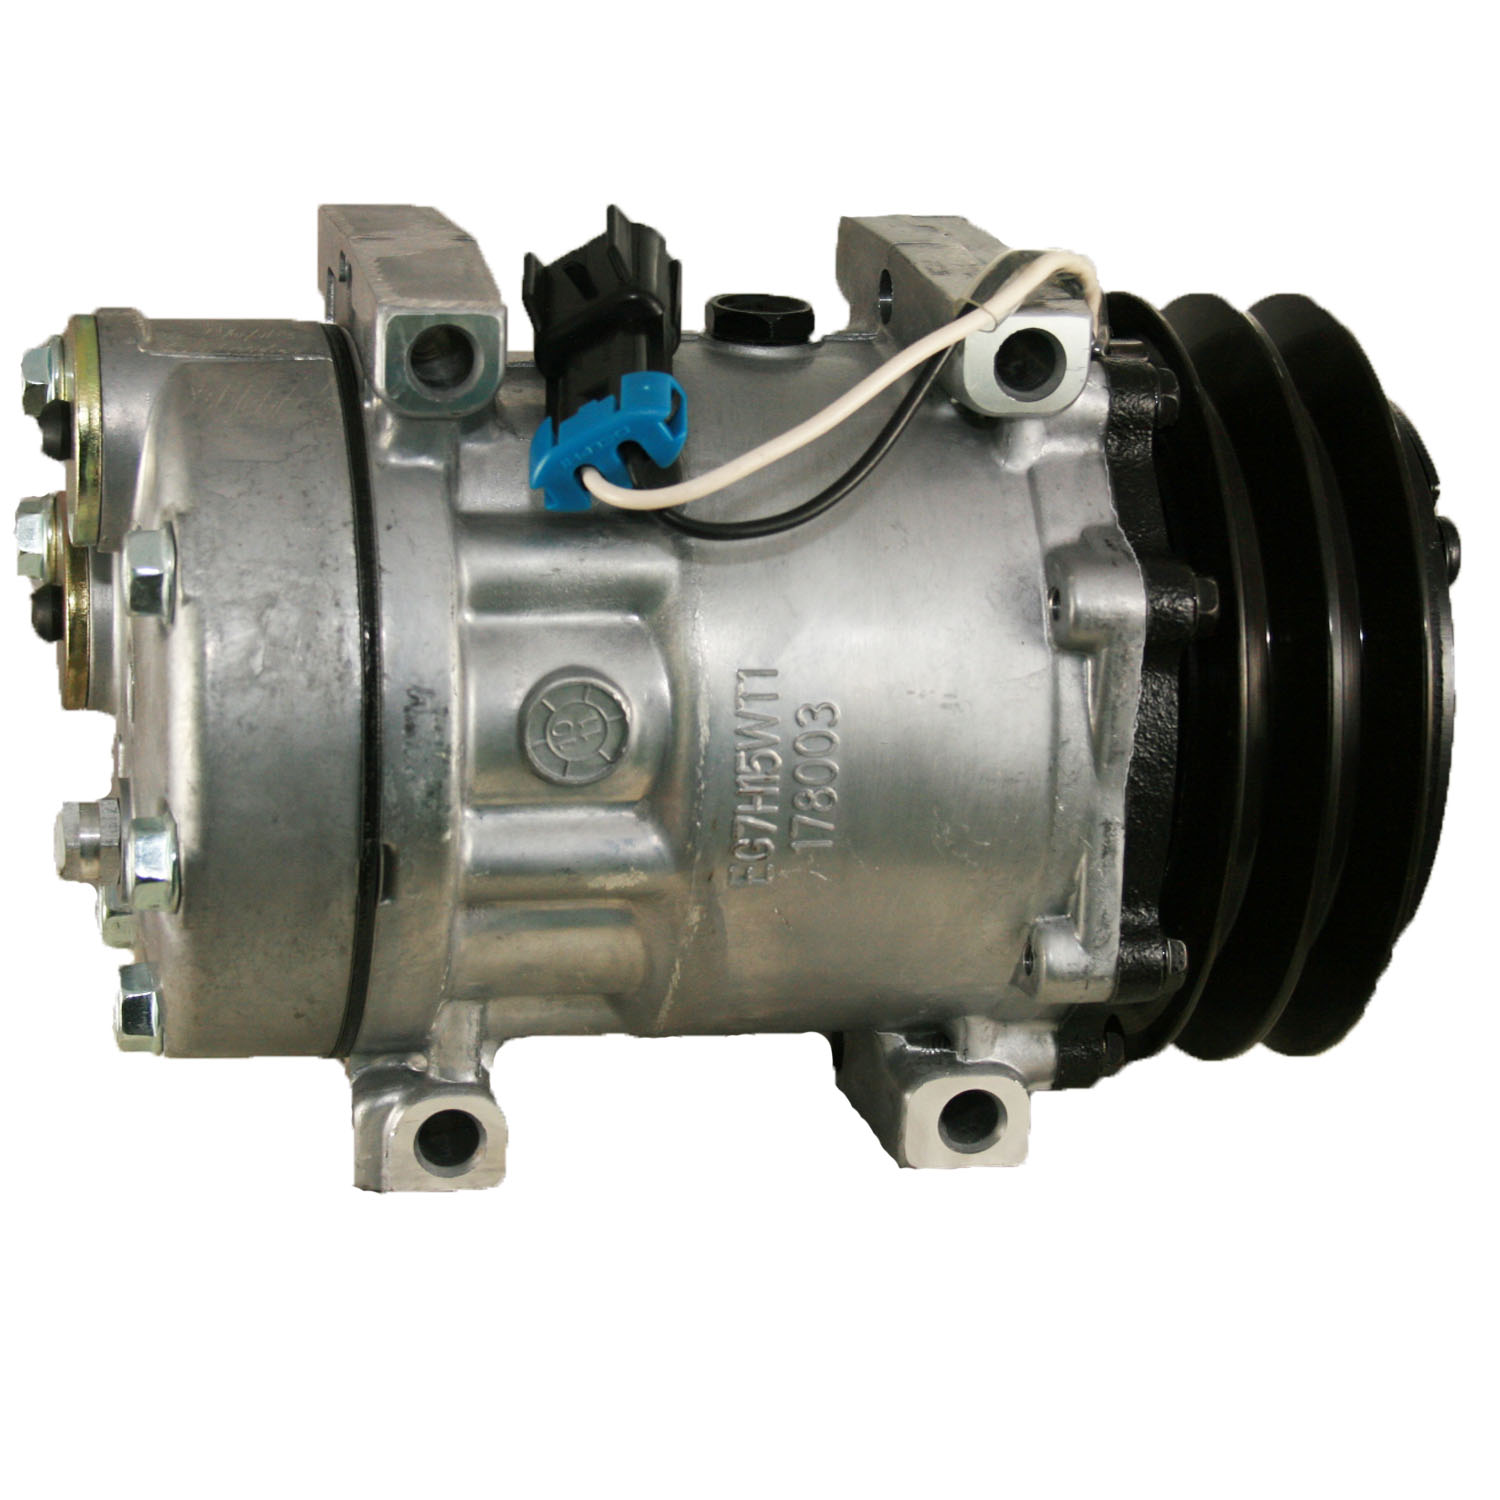 TCW Compressor 40580.2T1NEW New Product Image field_60b6a13a6e67c